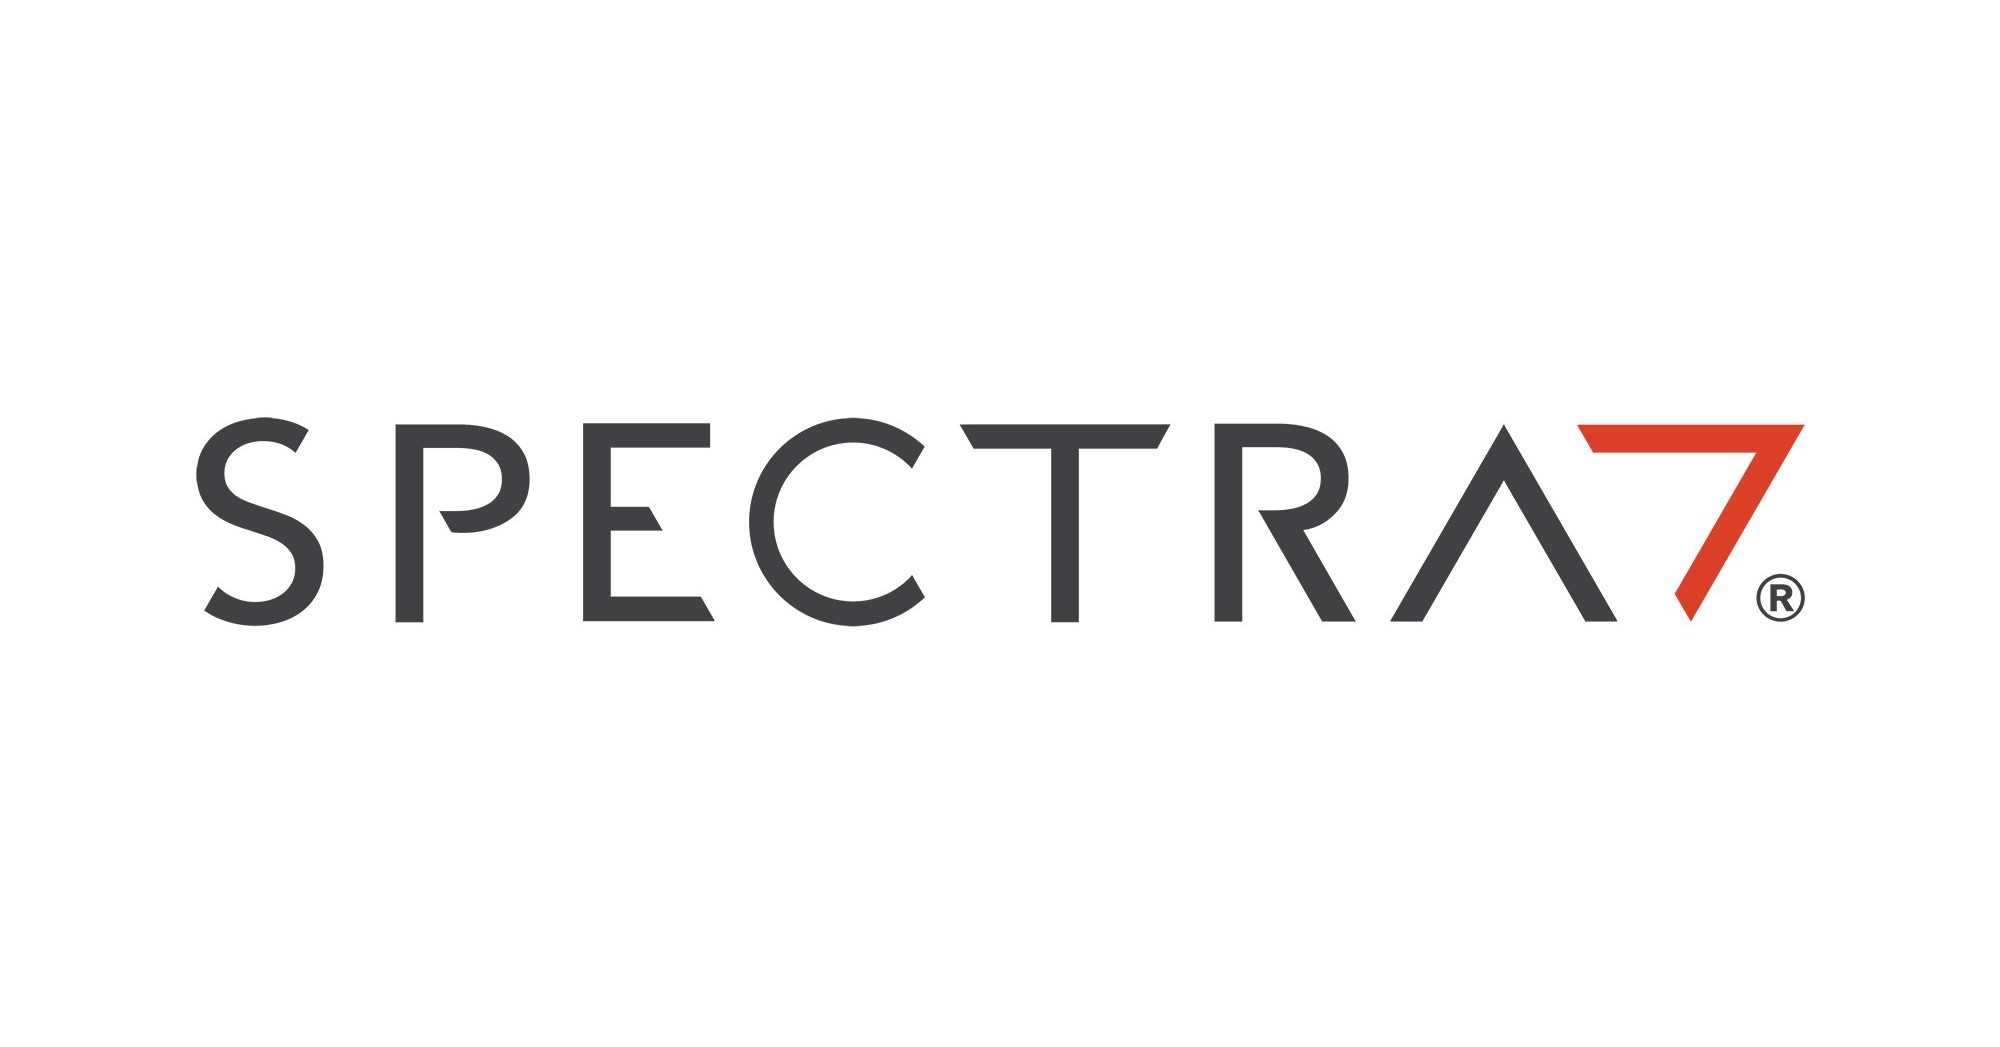 SPECTRA7 PARTICIPA DA 18ª CONFERÊNCIA ANUAL EMERGING TECHNOLOGY SUMMIT DA KEYBANC CAPITAL MARKETS